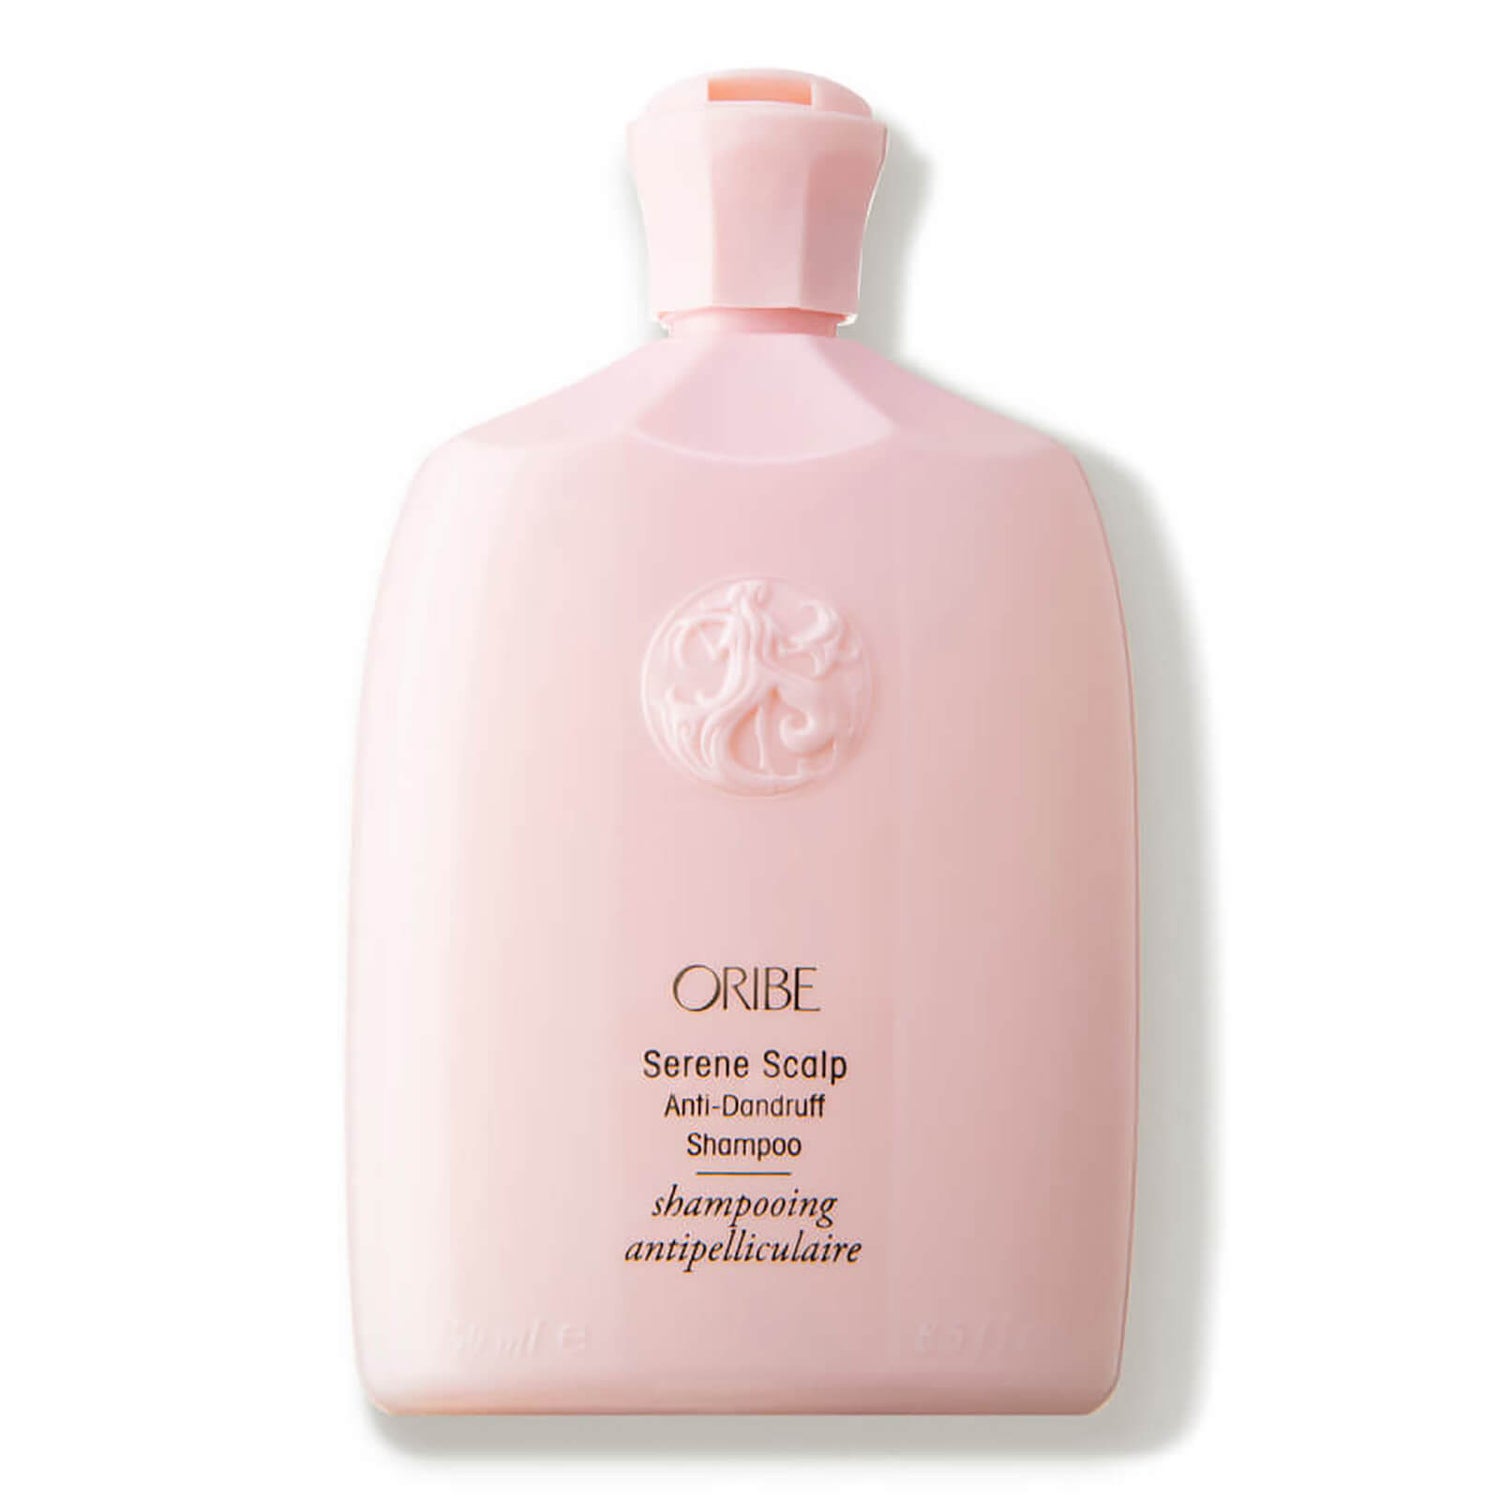 Oribe Serene Scalp Anti-Dandruff Shampoo 8.5 oz